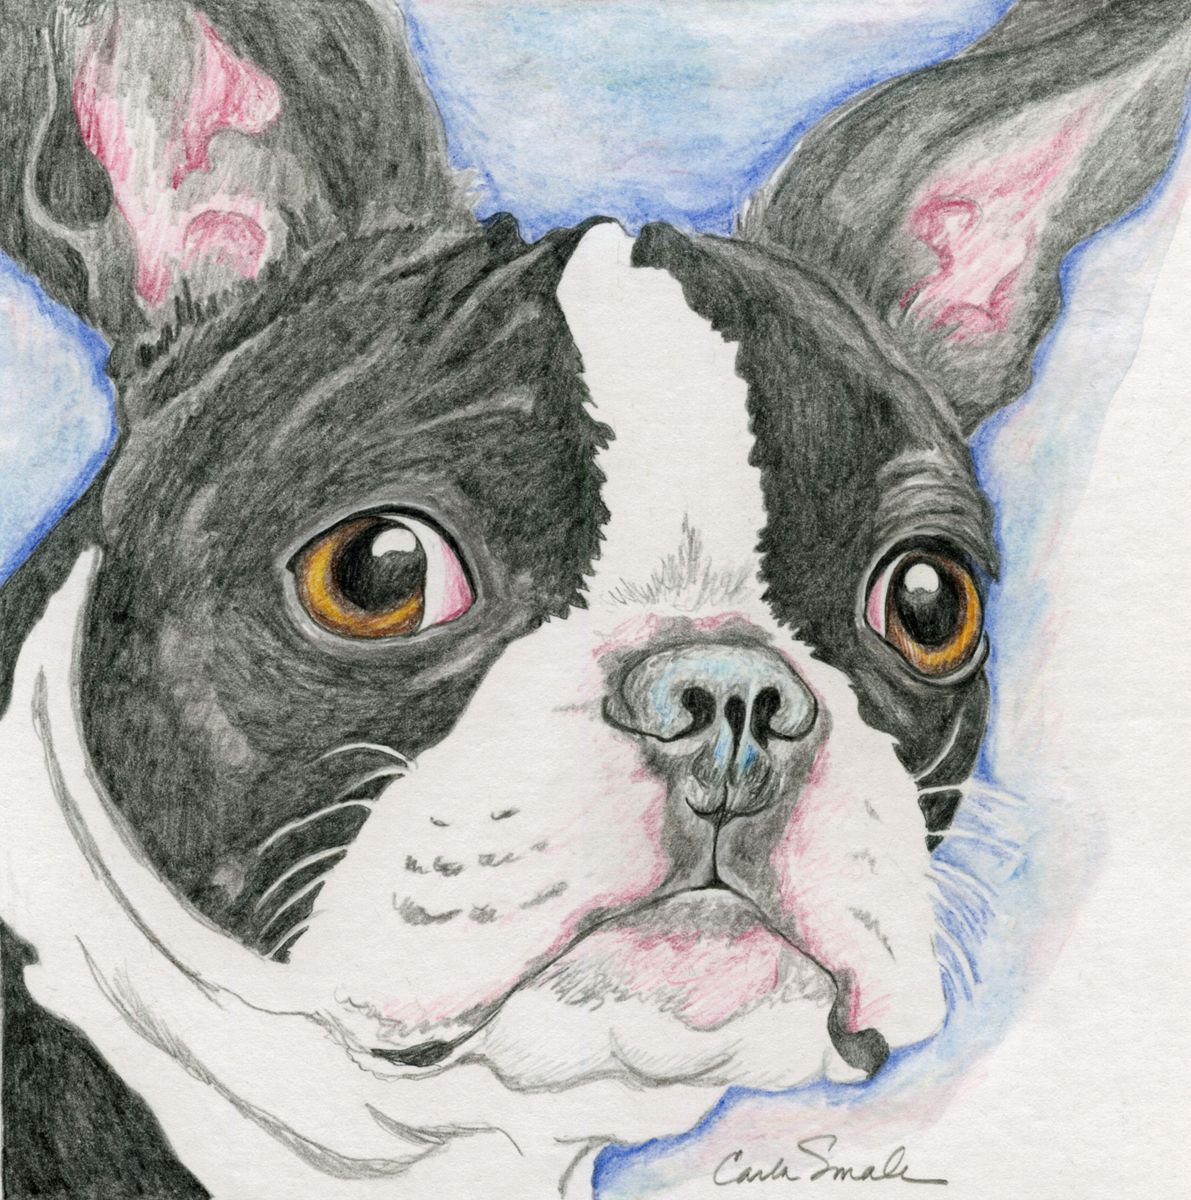 Boston Terrier Pet Dog Art Original Drawing-Carla Smale by carla smale